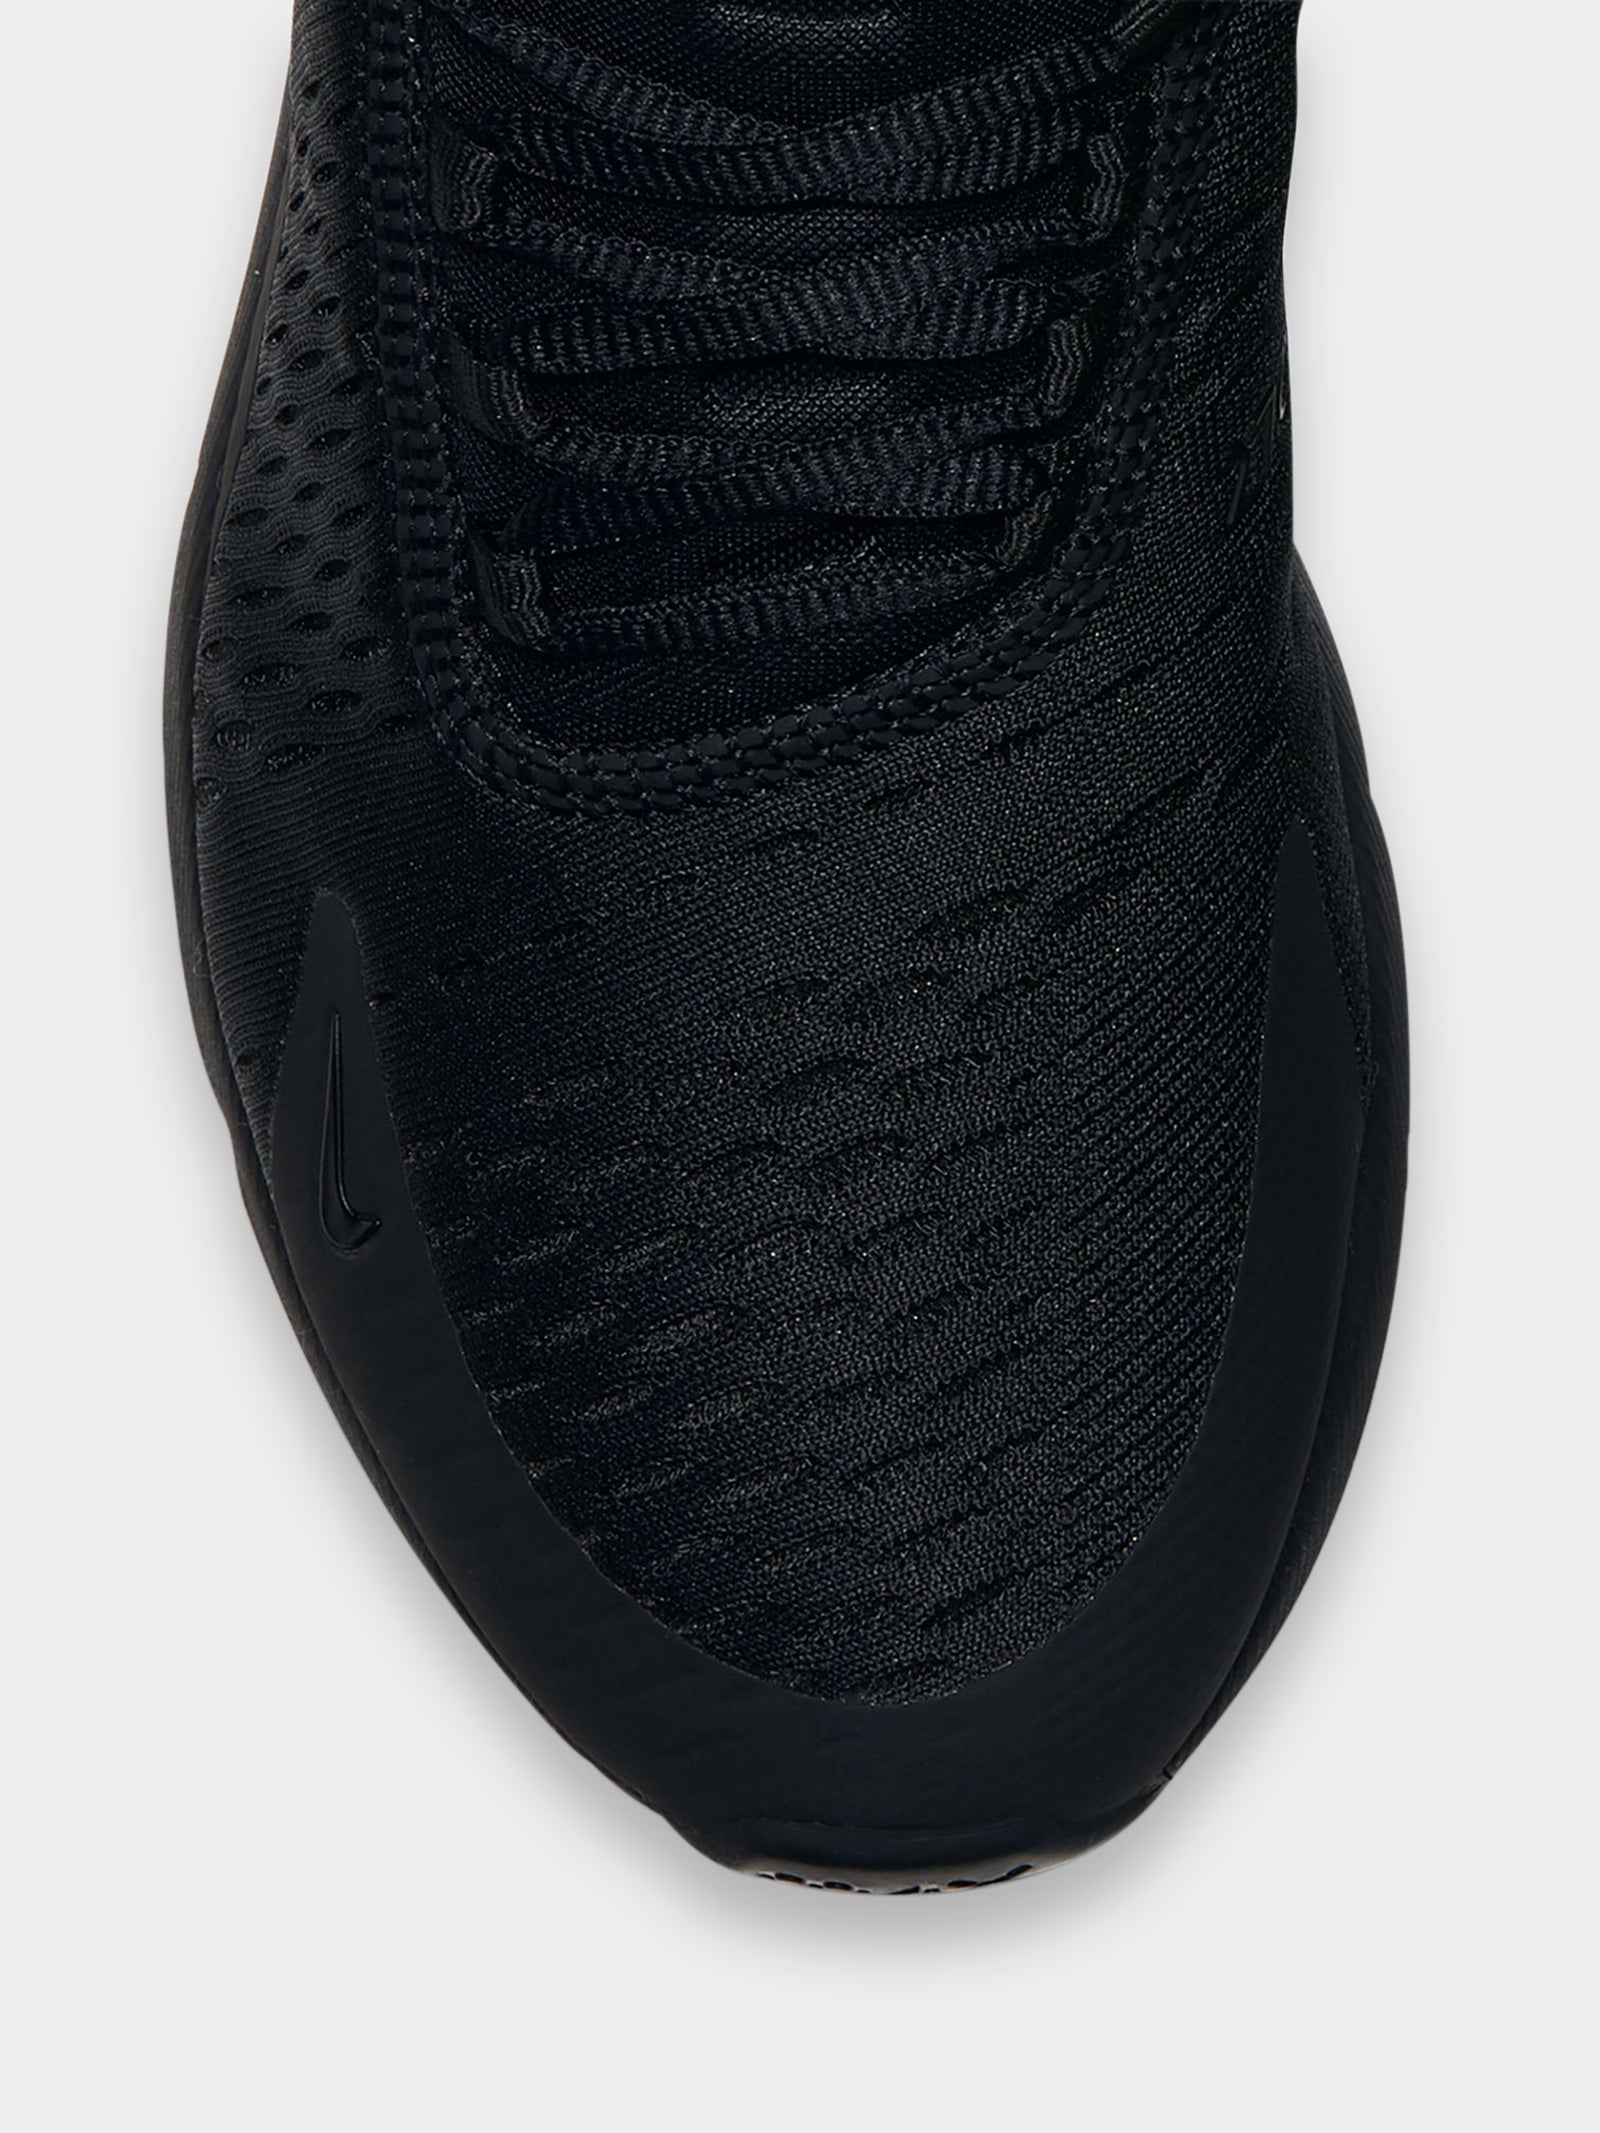 Womens Nike Air Max 270 Sneakers in Black/Black